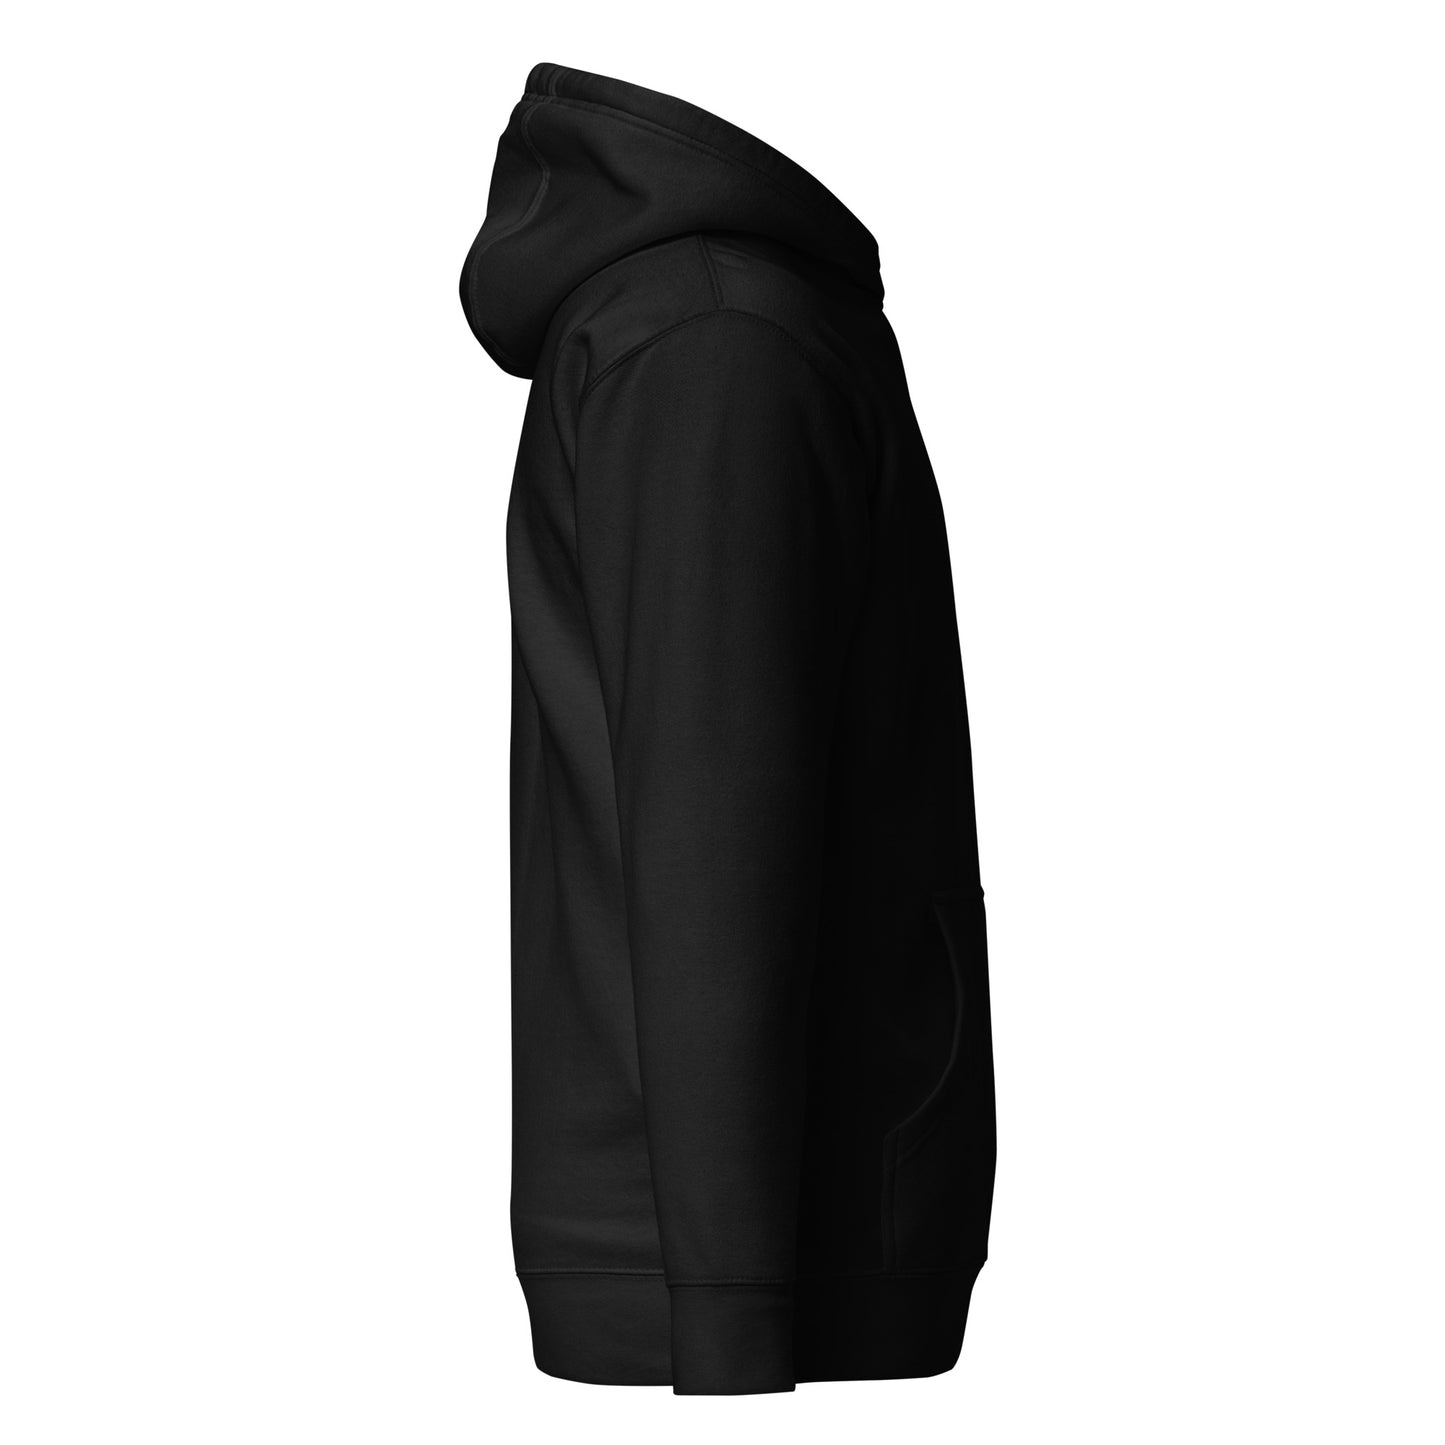 Unisex Hoodie Black - Alpha Clothing